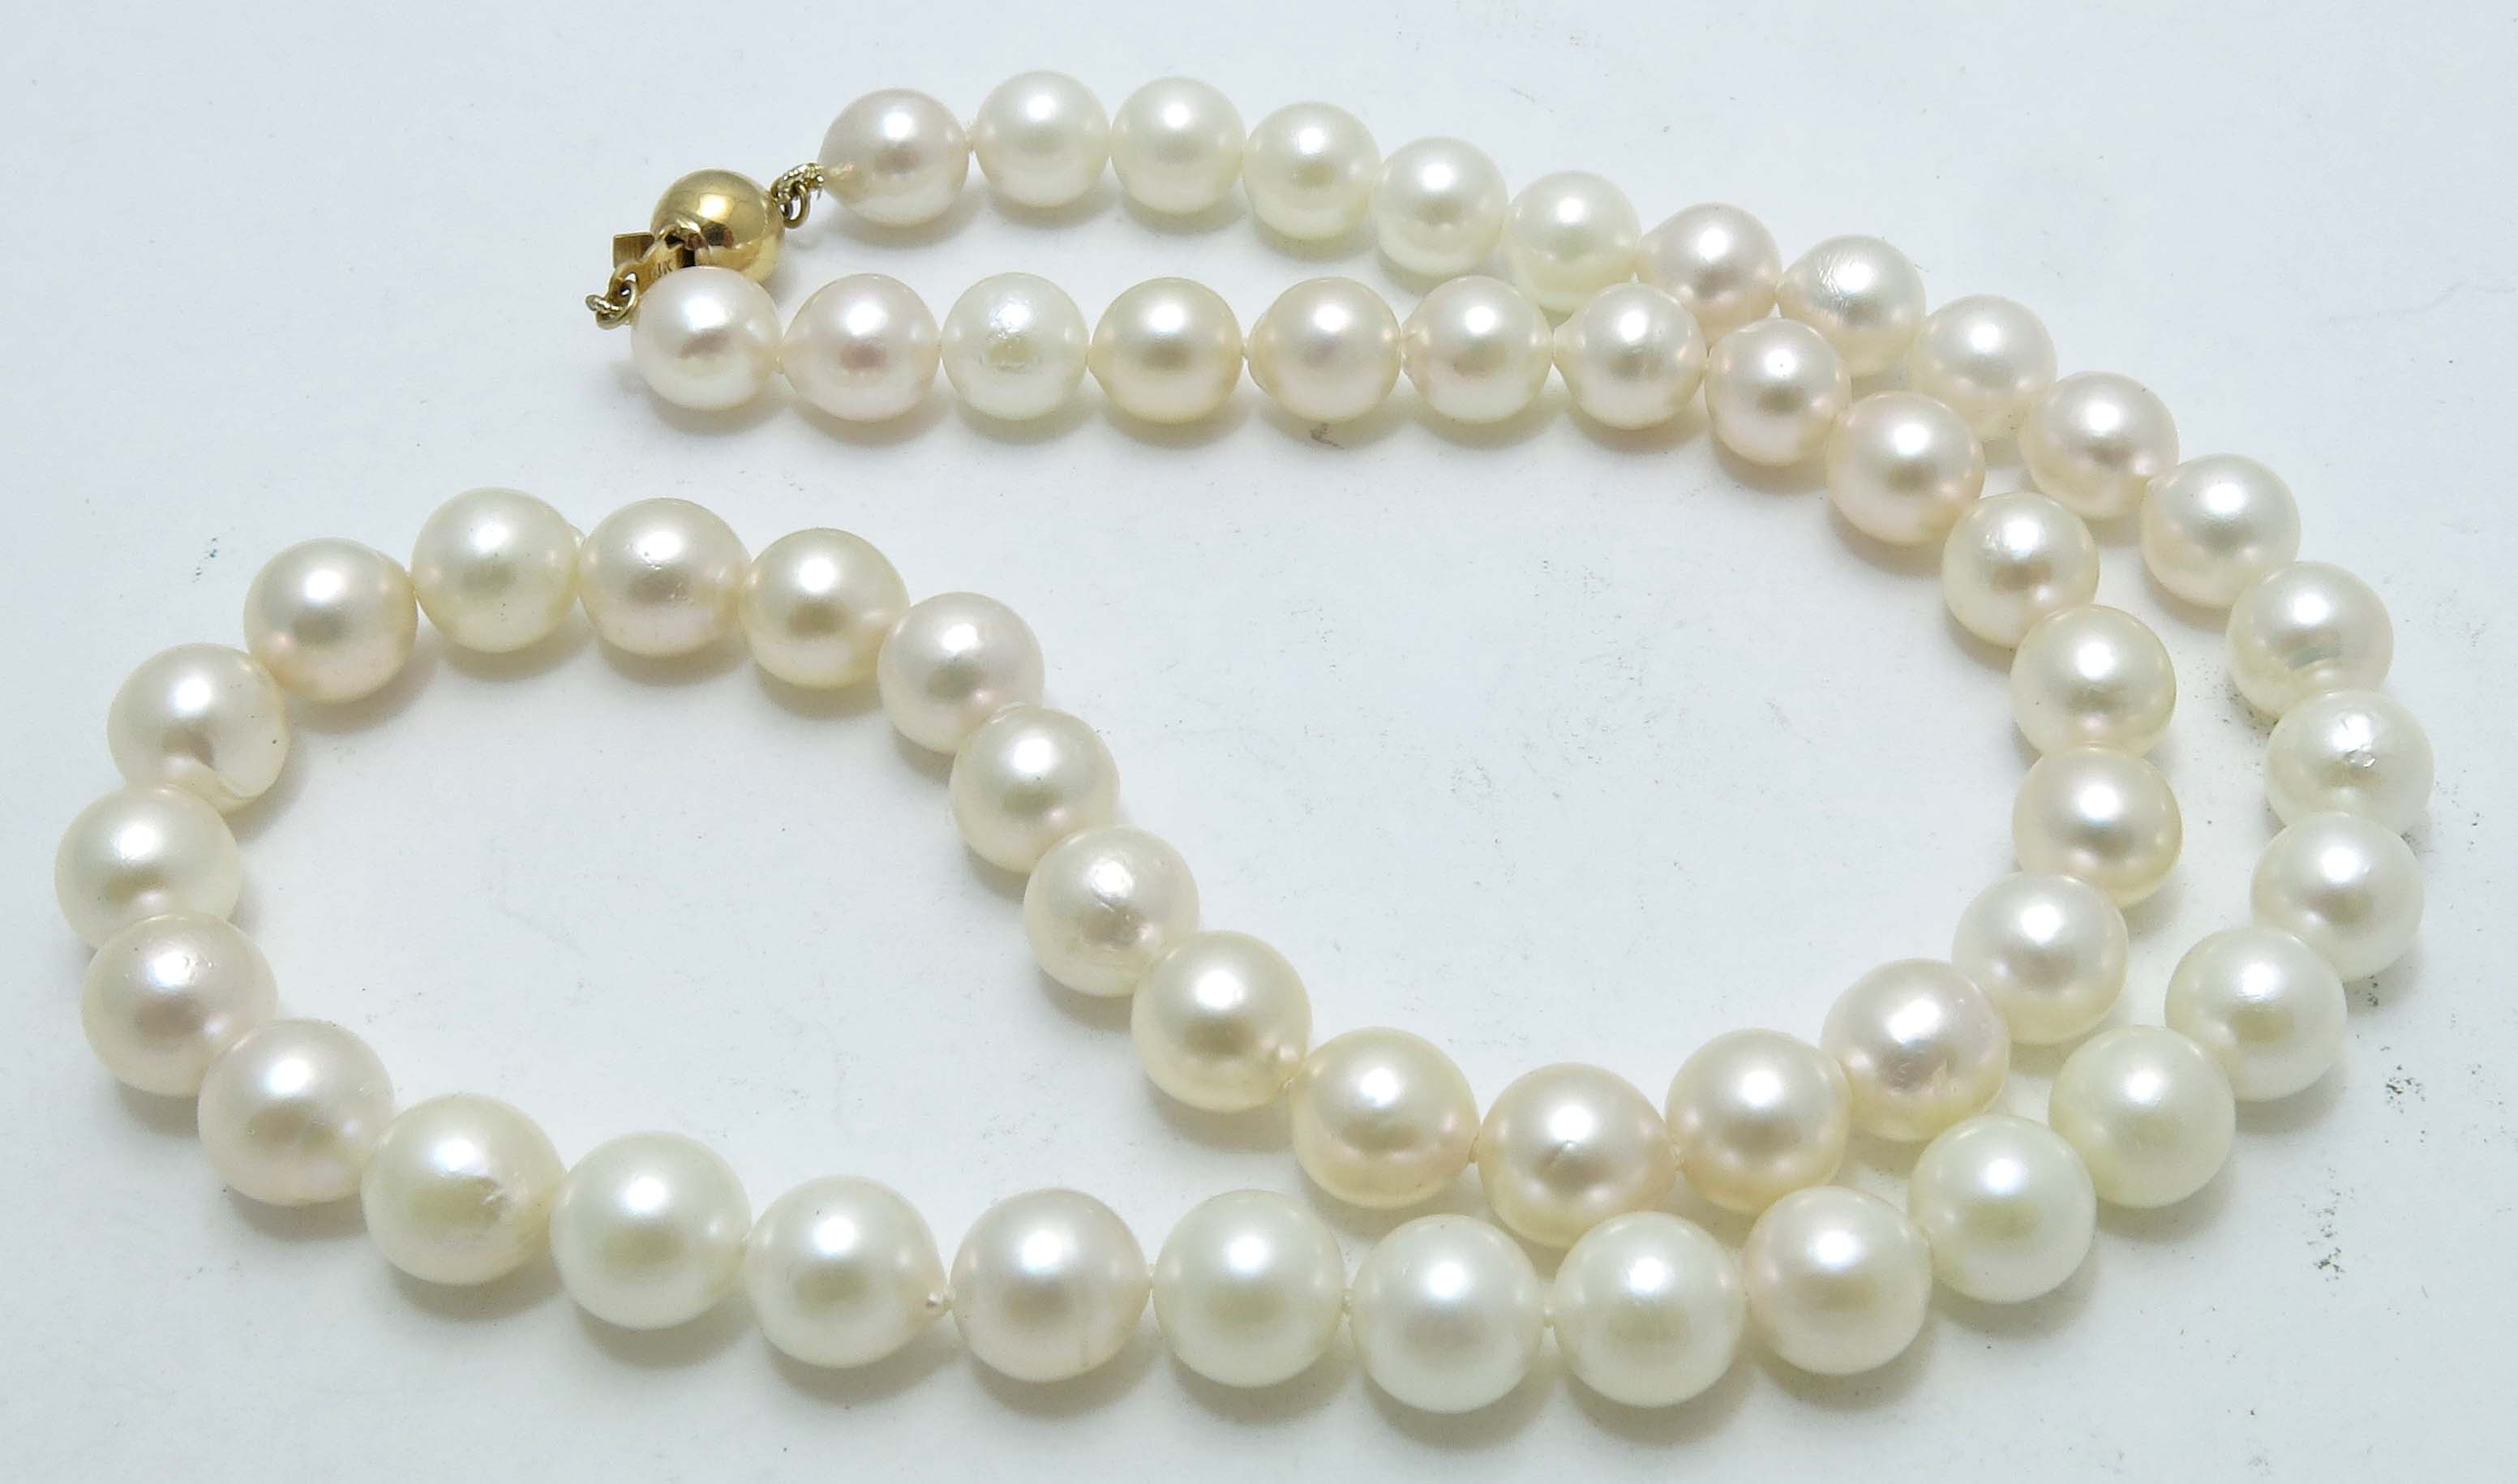 Genuine Cultured Pearl Necklace - Lot 947690 | ALLBIDS